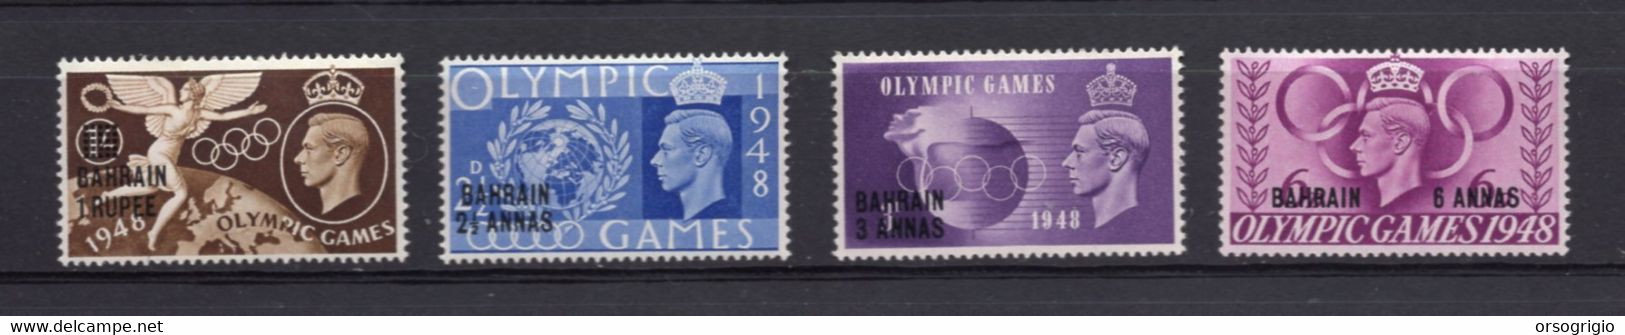 GRAN BRETAGNA - OLYMPIC GAMES - BAHRAIN - Zomer 1948: Londen